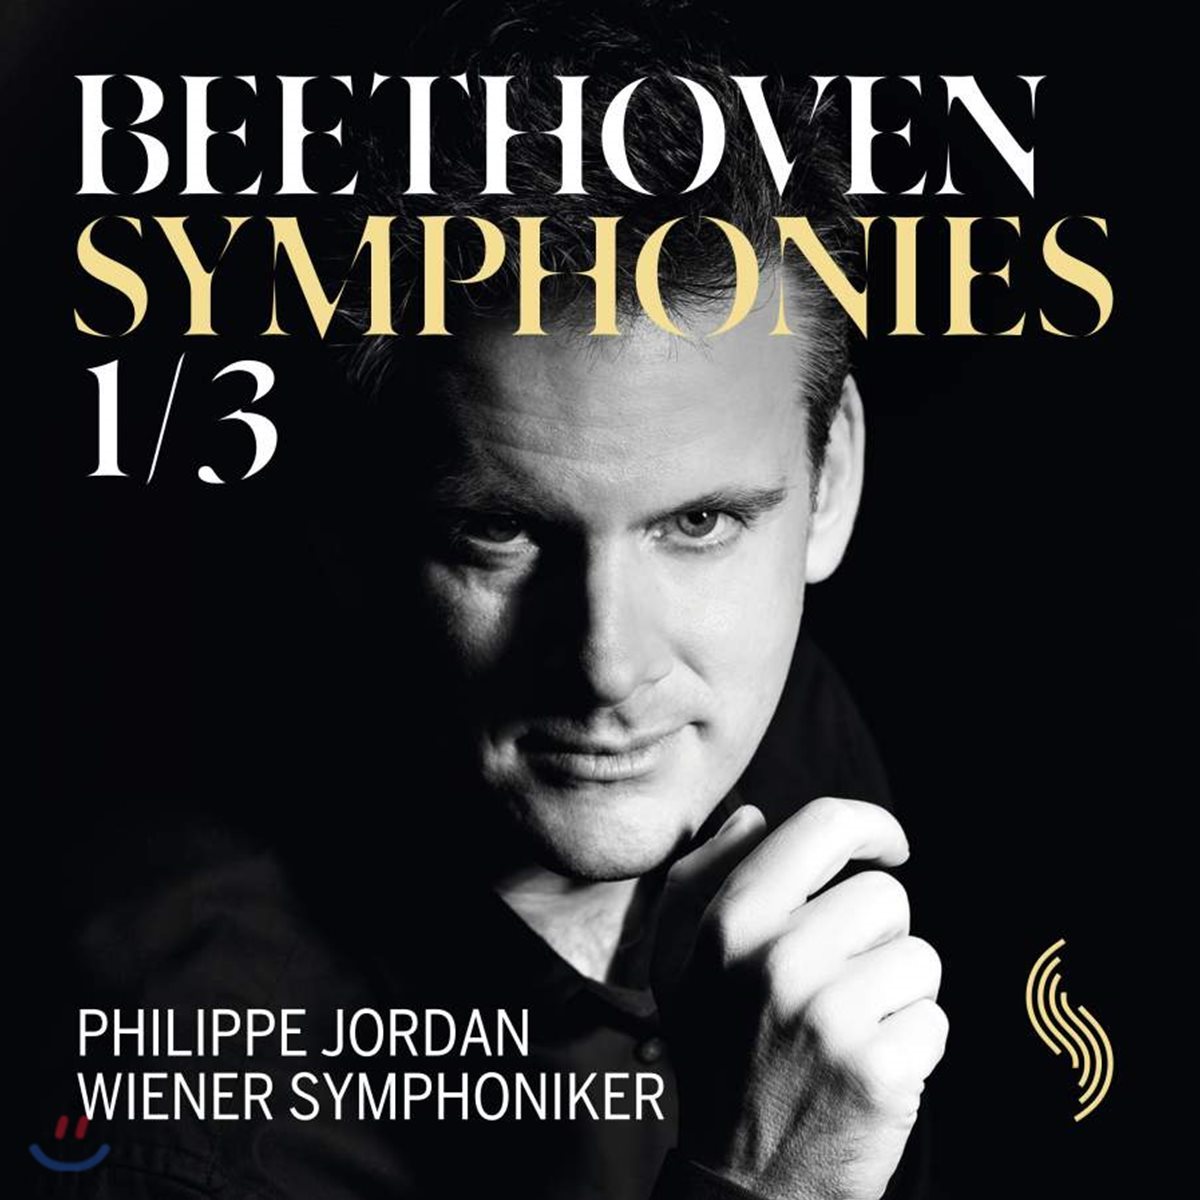 Philippe Jordan 베토벤: 교향곡 1번 3번 `에로이카` (Beethoven: Symphonies Op.21, Op.55)